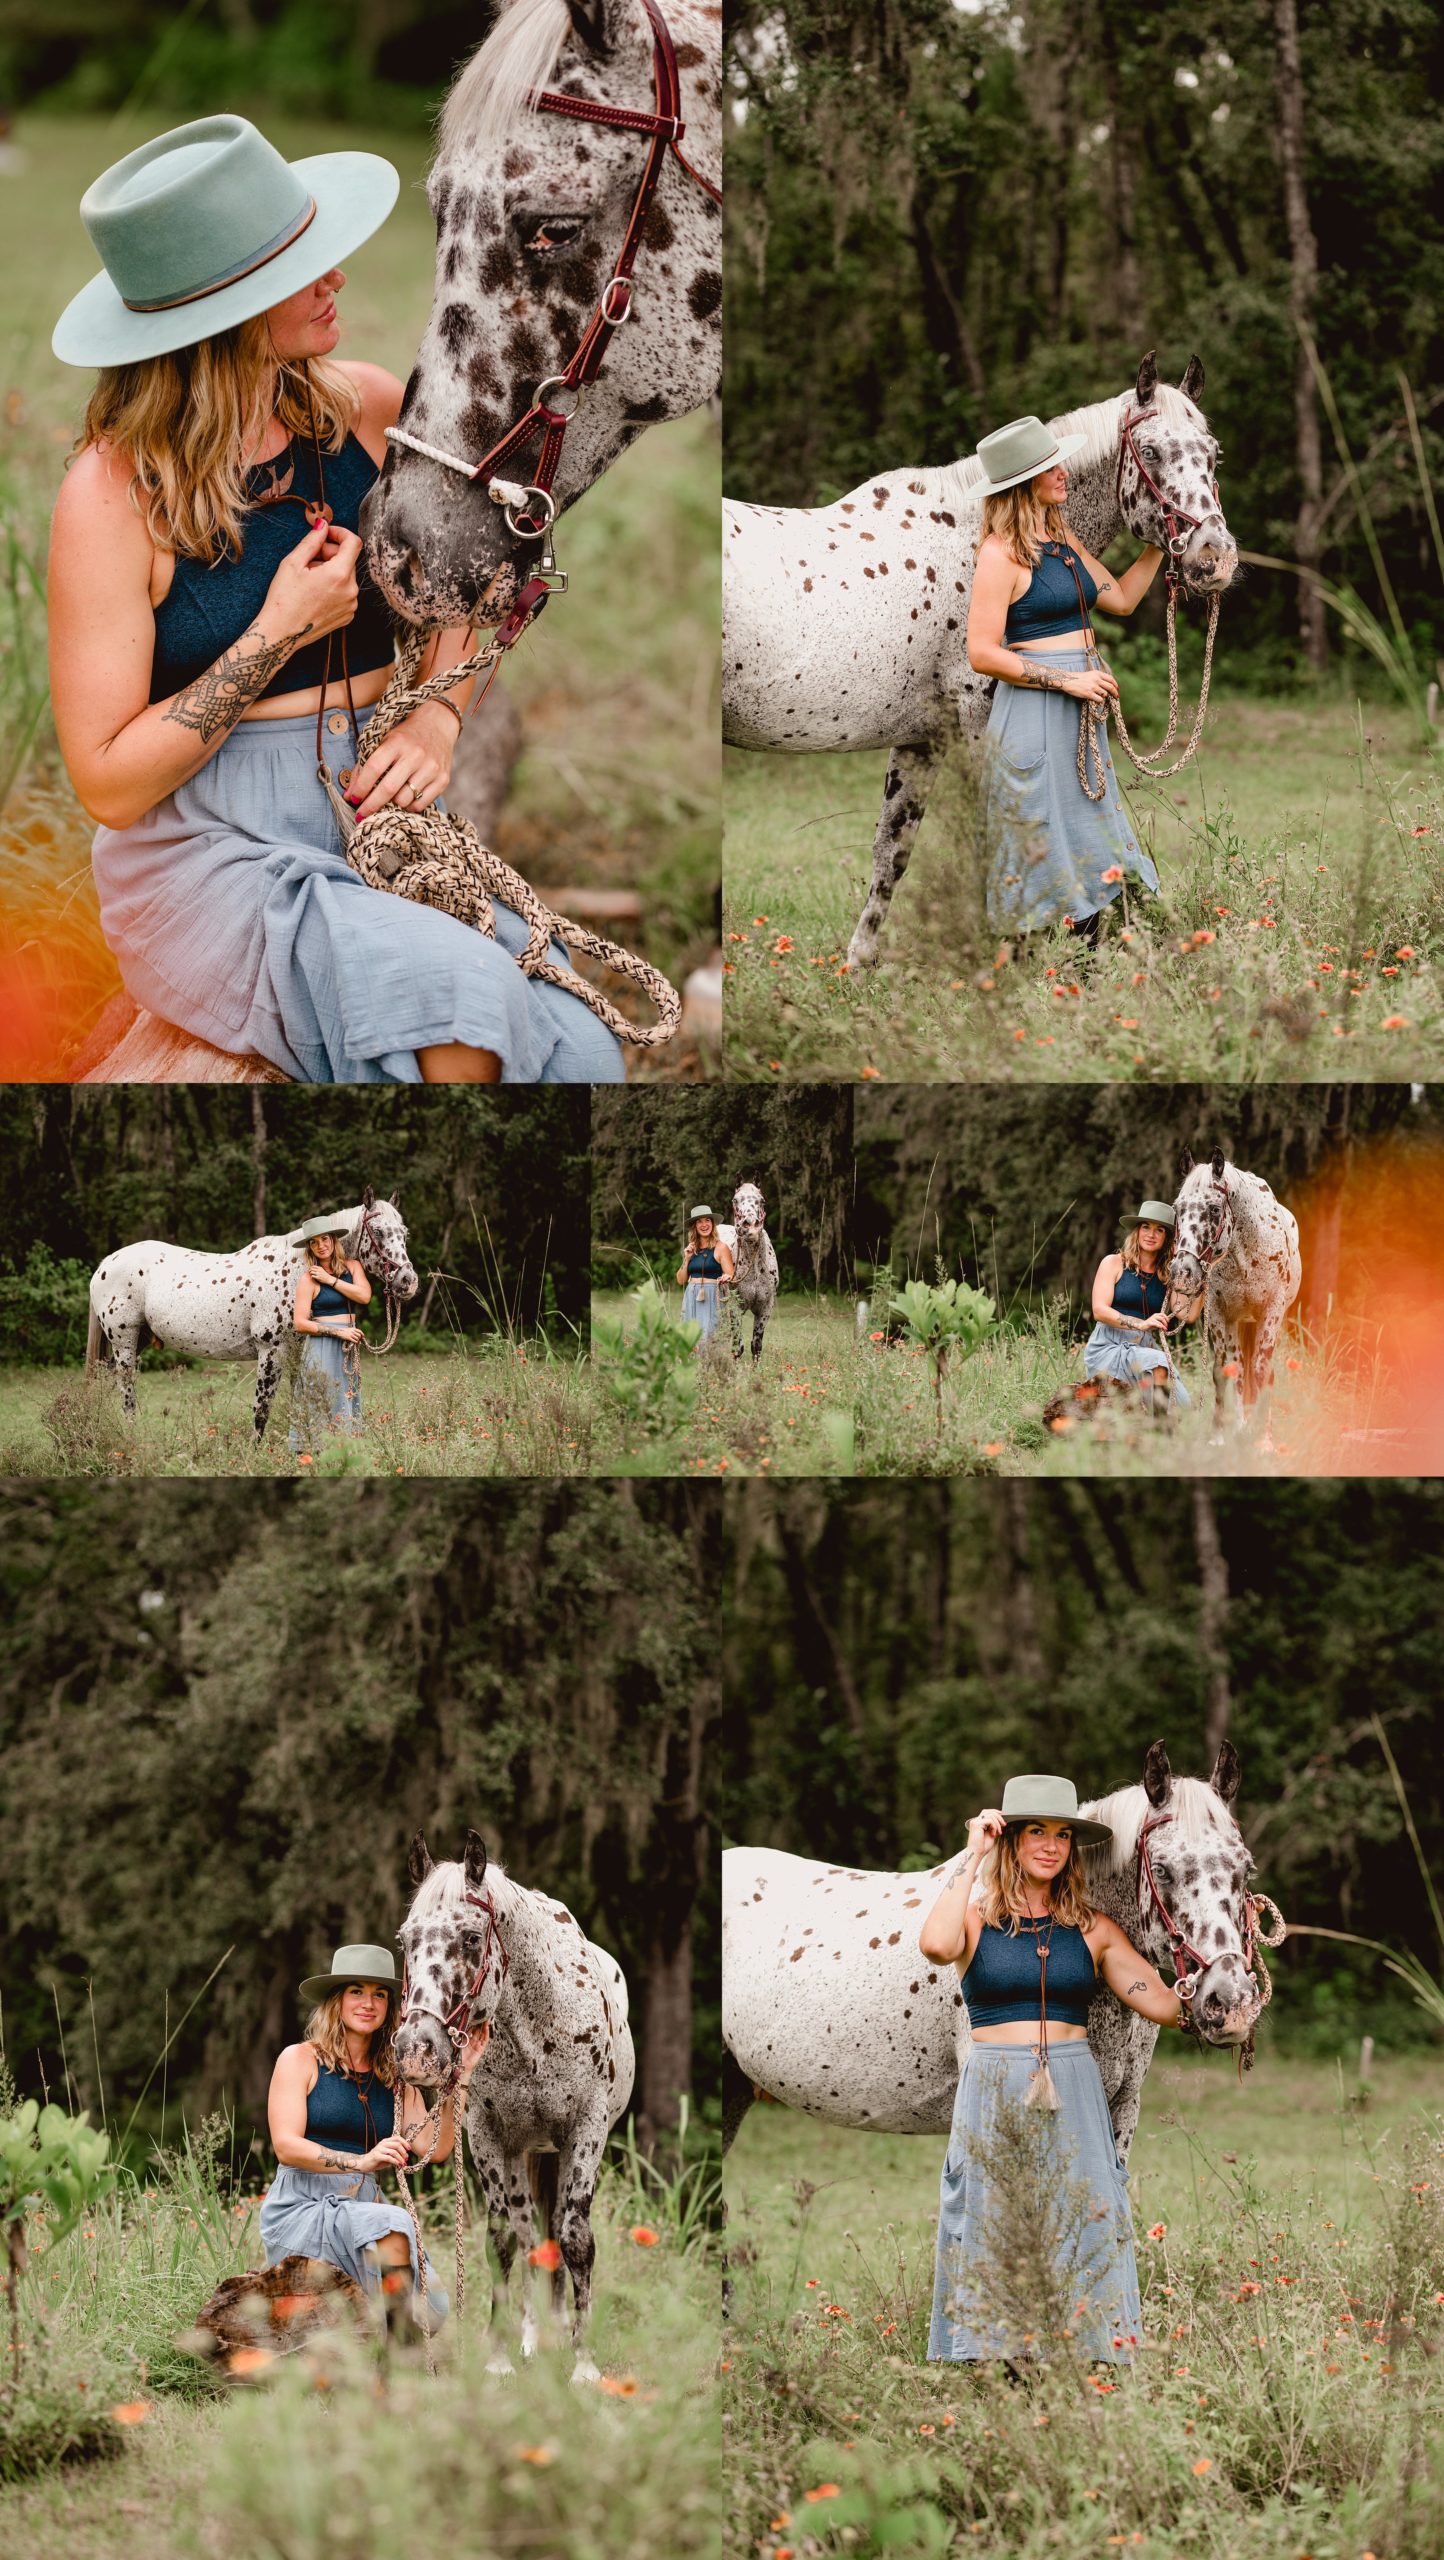 Appaloosa horse and rider photos taken in Gainesville, FL.